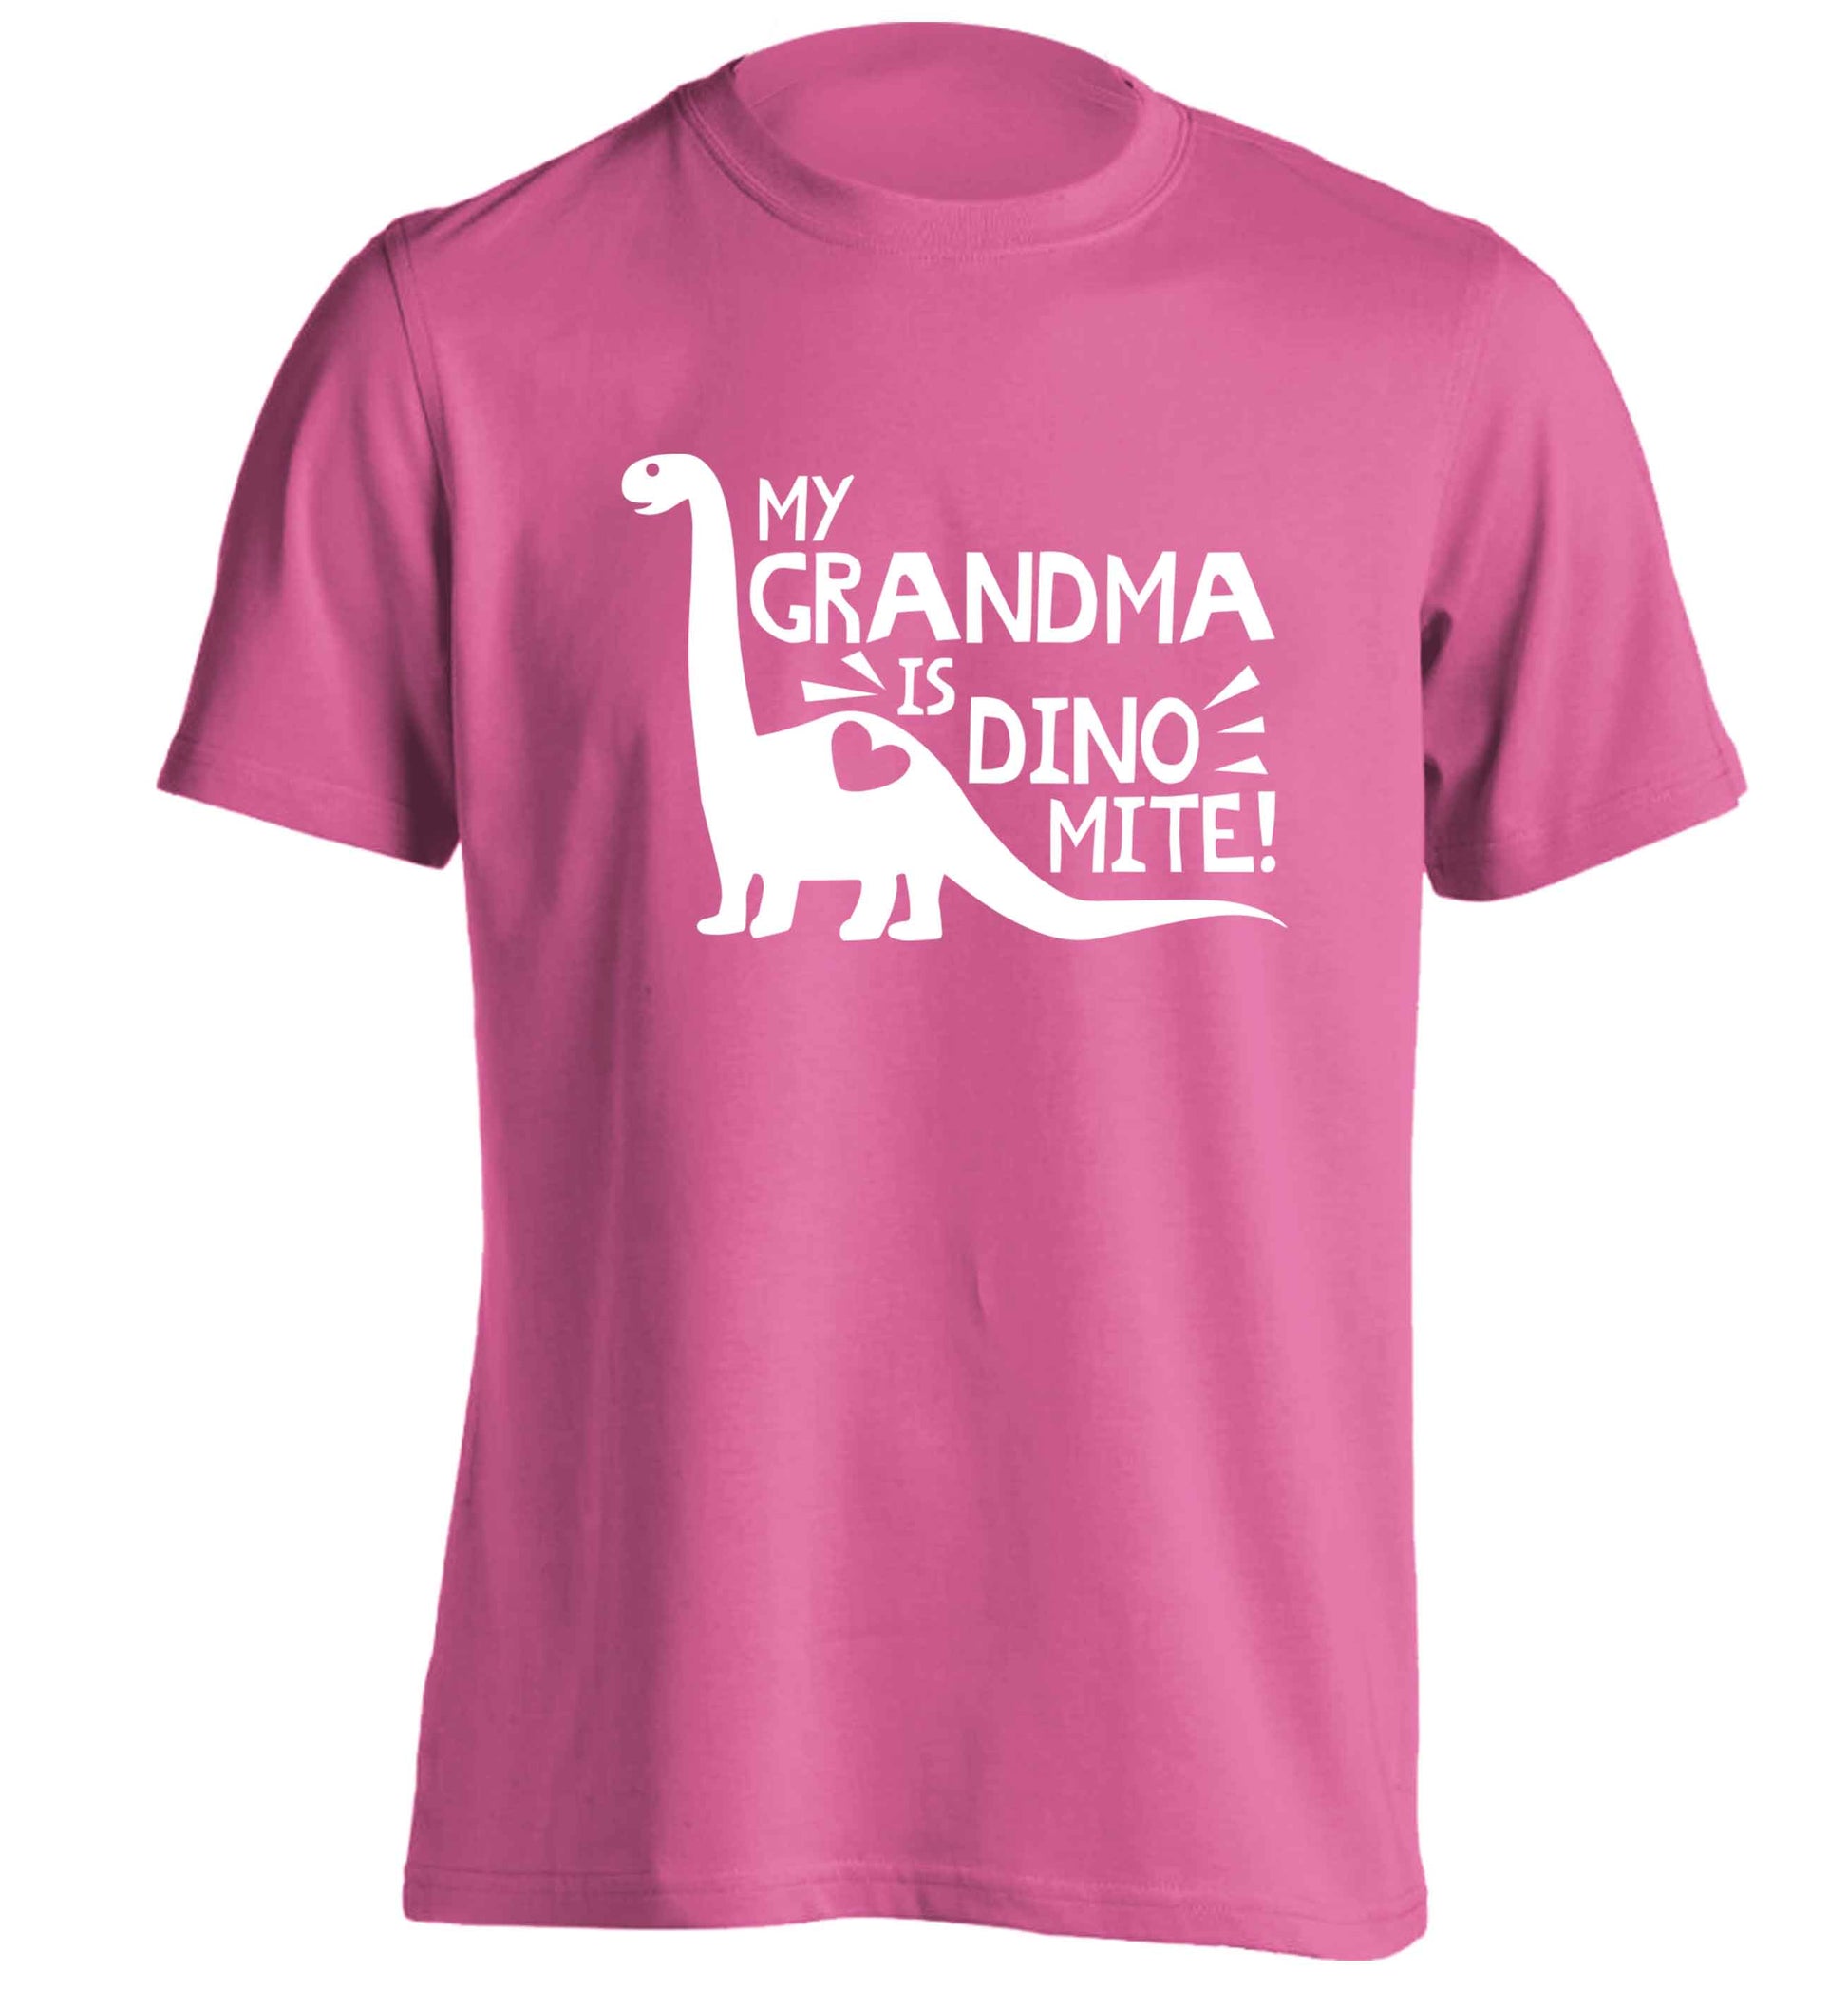 My grandma is dinomite! adults unisex pink Tshirt 2XL